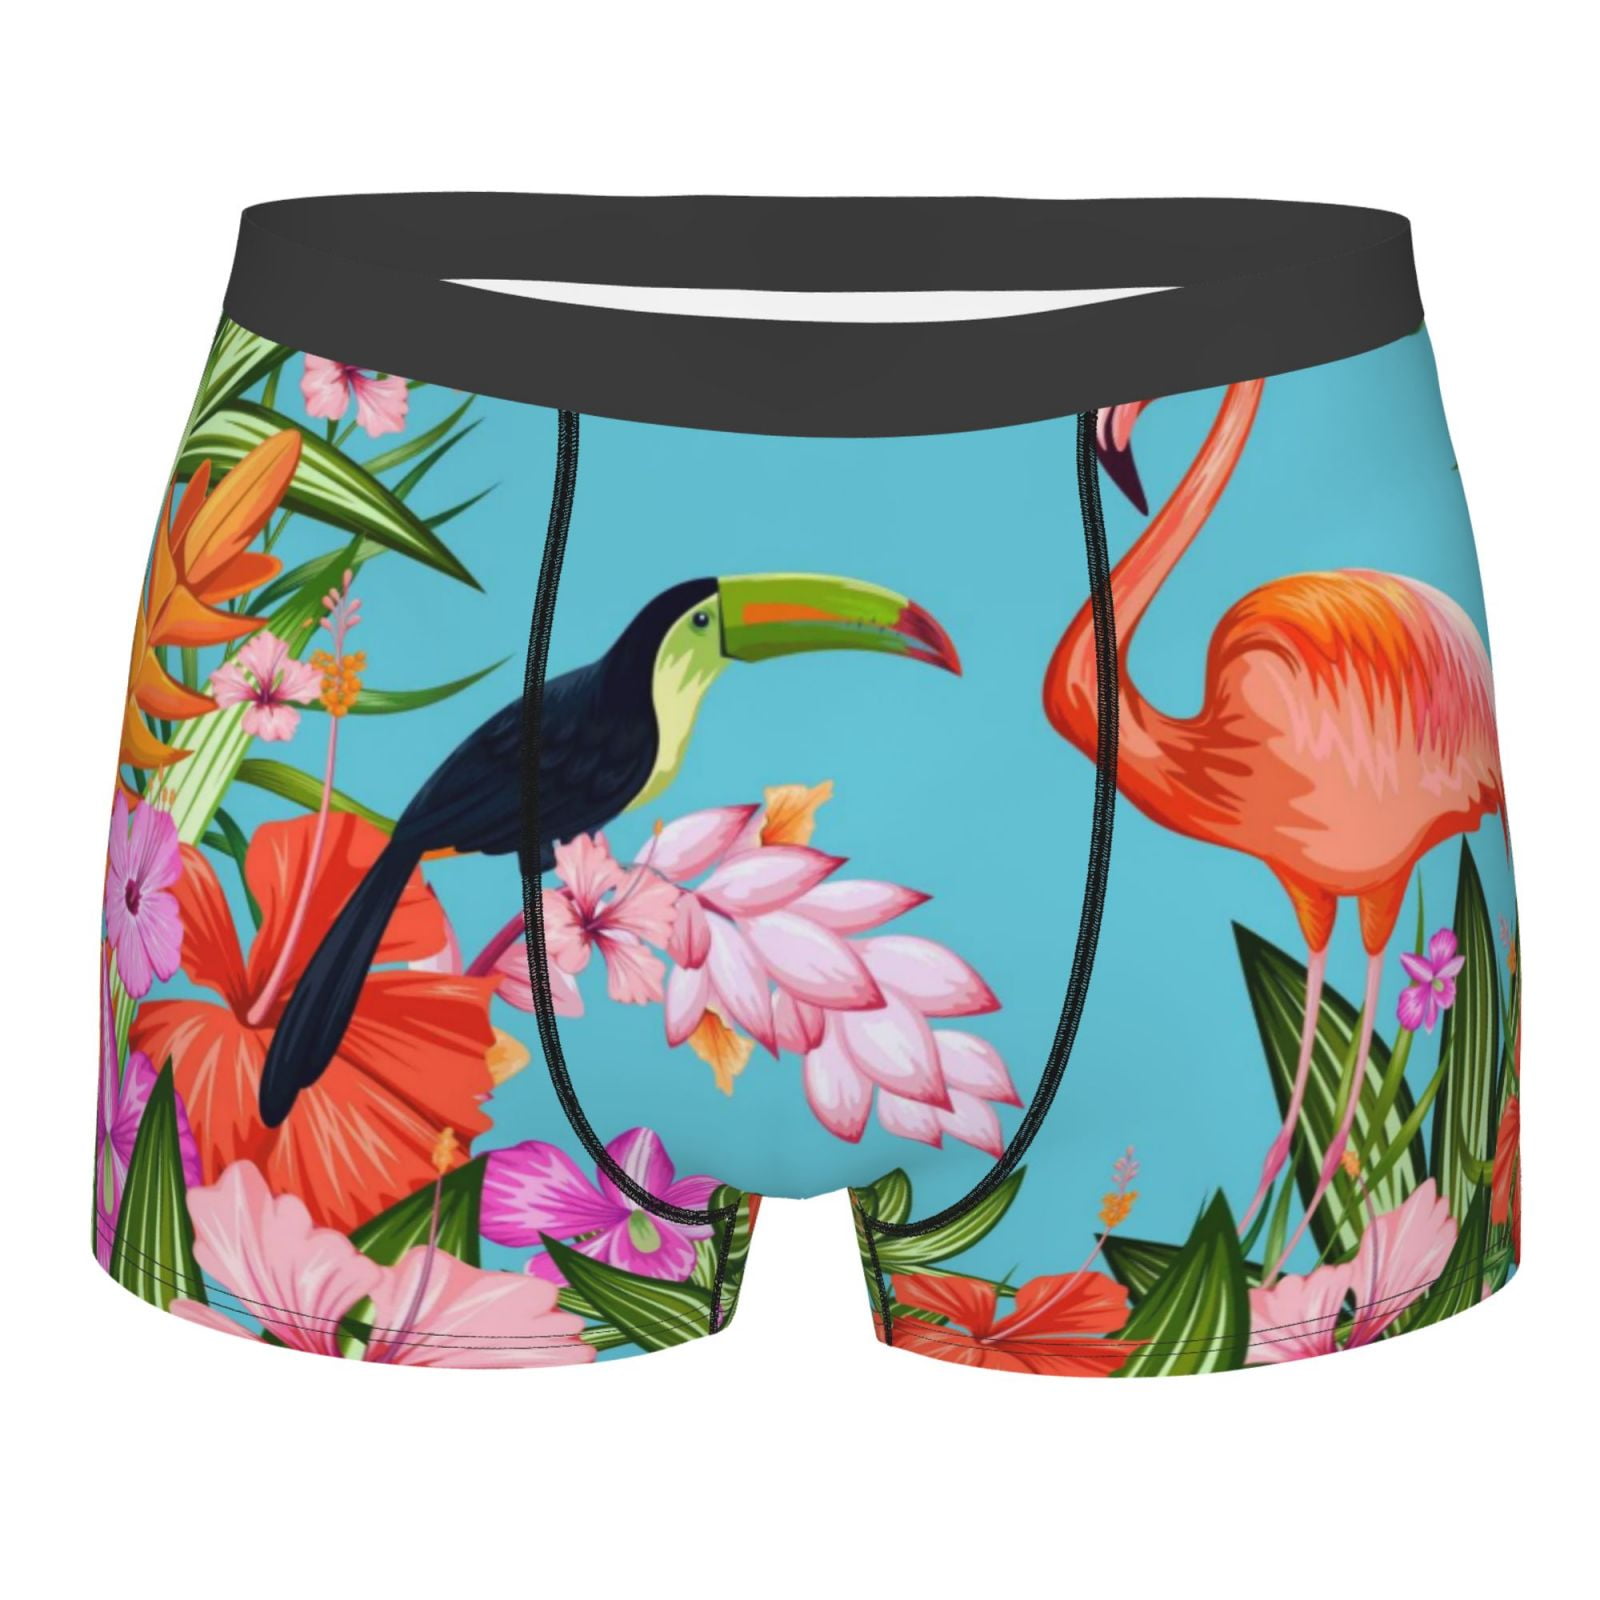 Kll Tropical Fruit Men'S Cotton Boxer Briefs Underwear-Small 